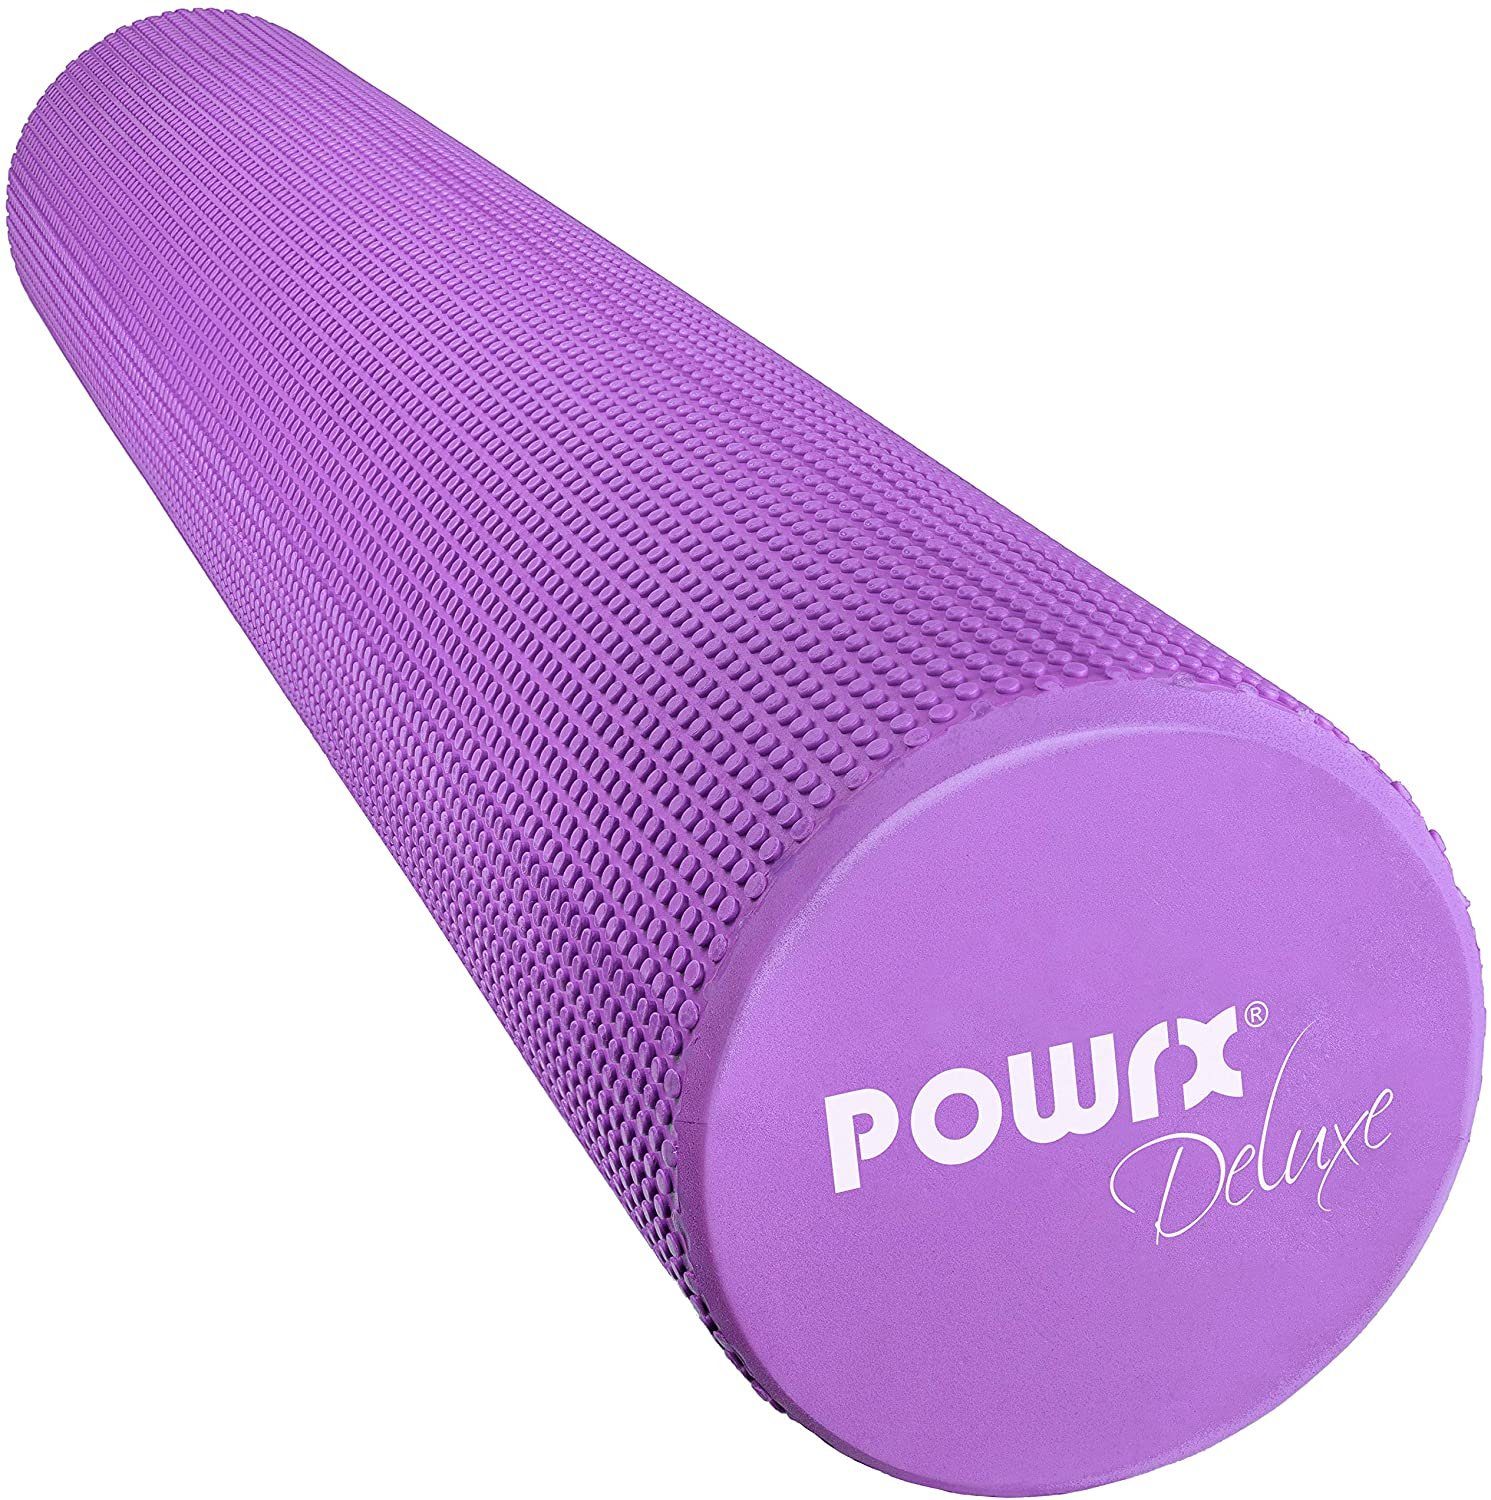 POWRX Yoga-/Pilates-/Schaumstoff-Roller Pink - X Cm 15 90 45/90cm für Pilatesrolle Faszien-Training,